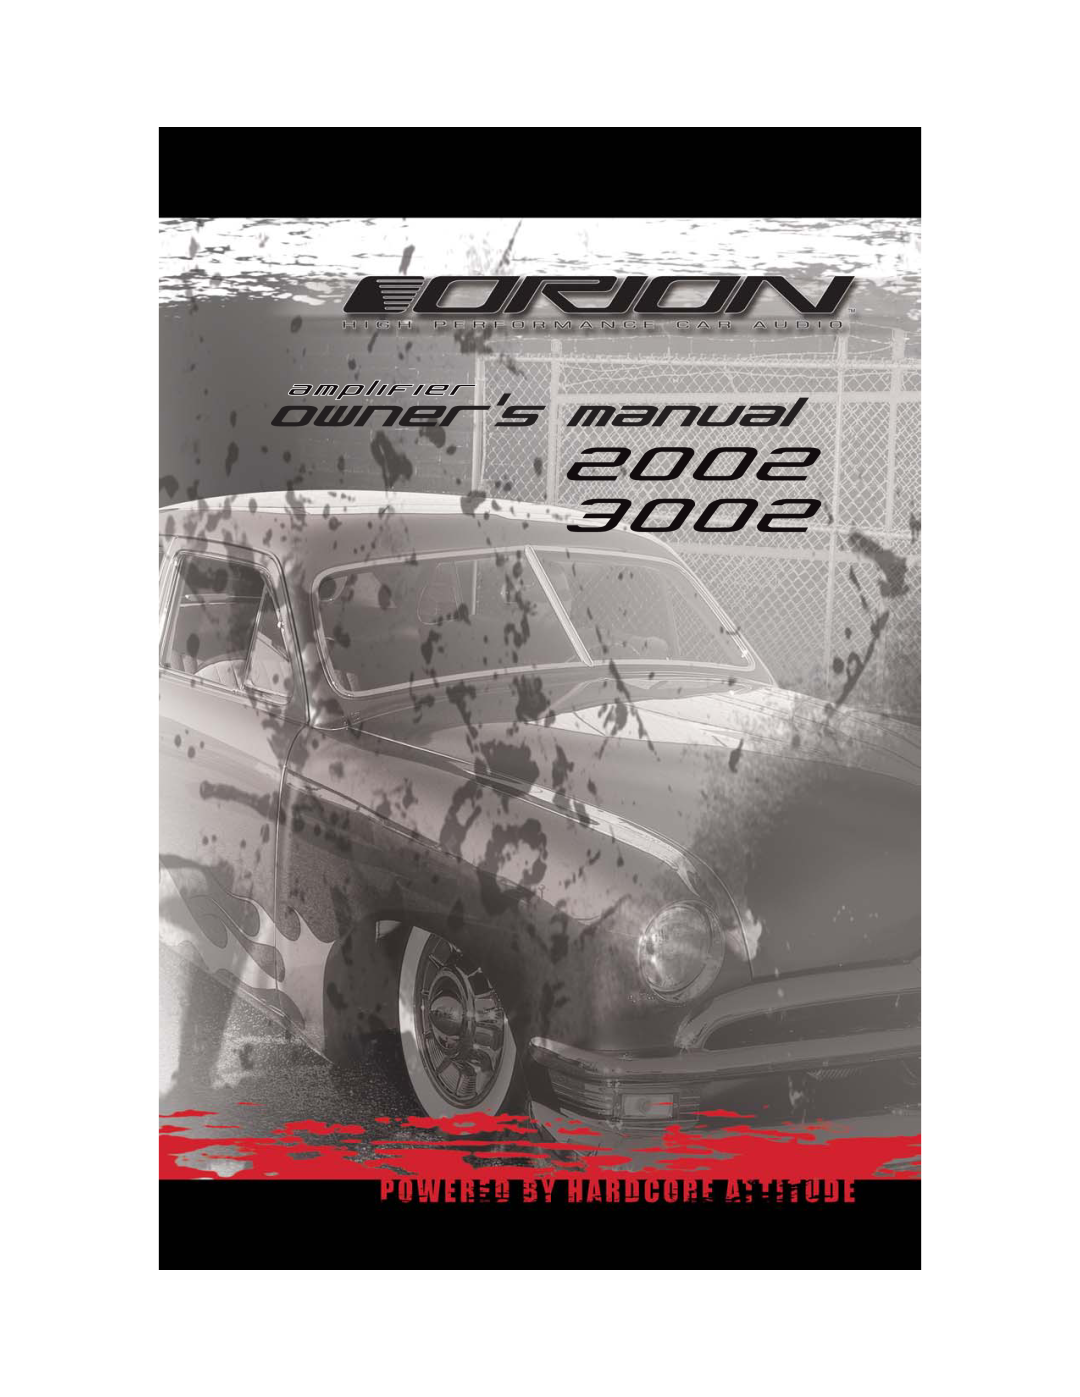 Orion Car Audio 2002, 3002 manual 